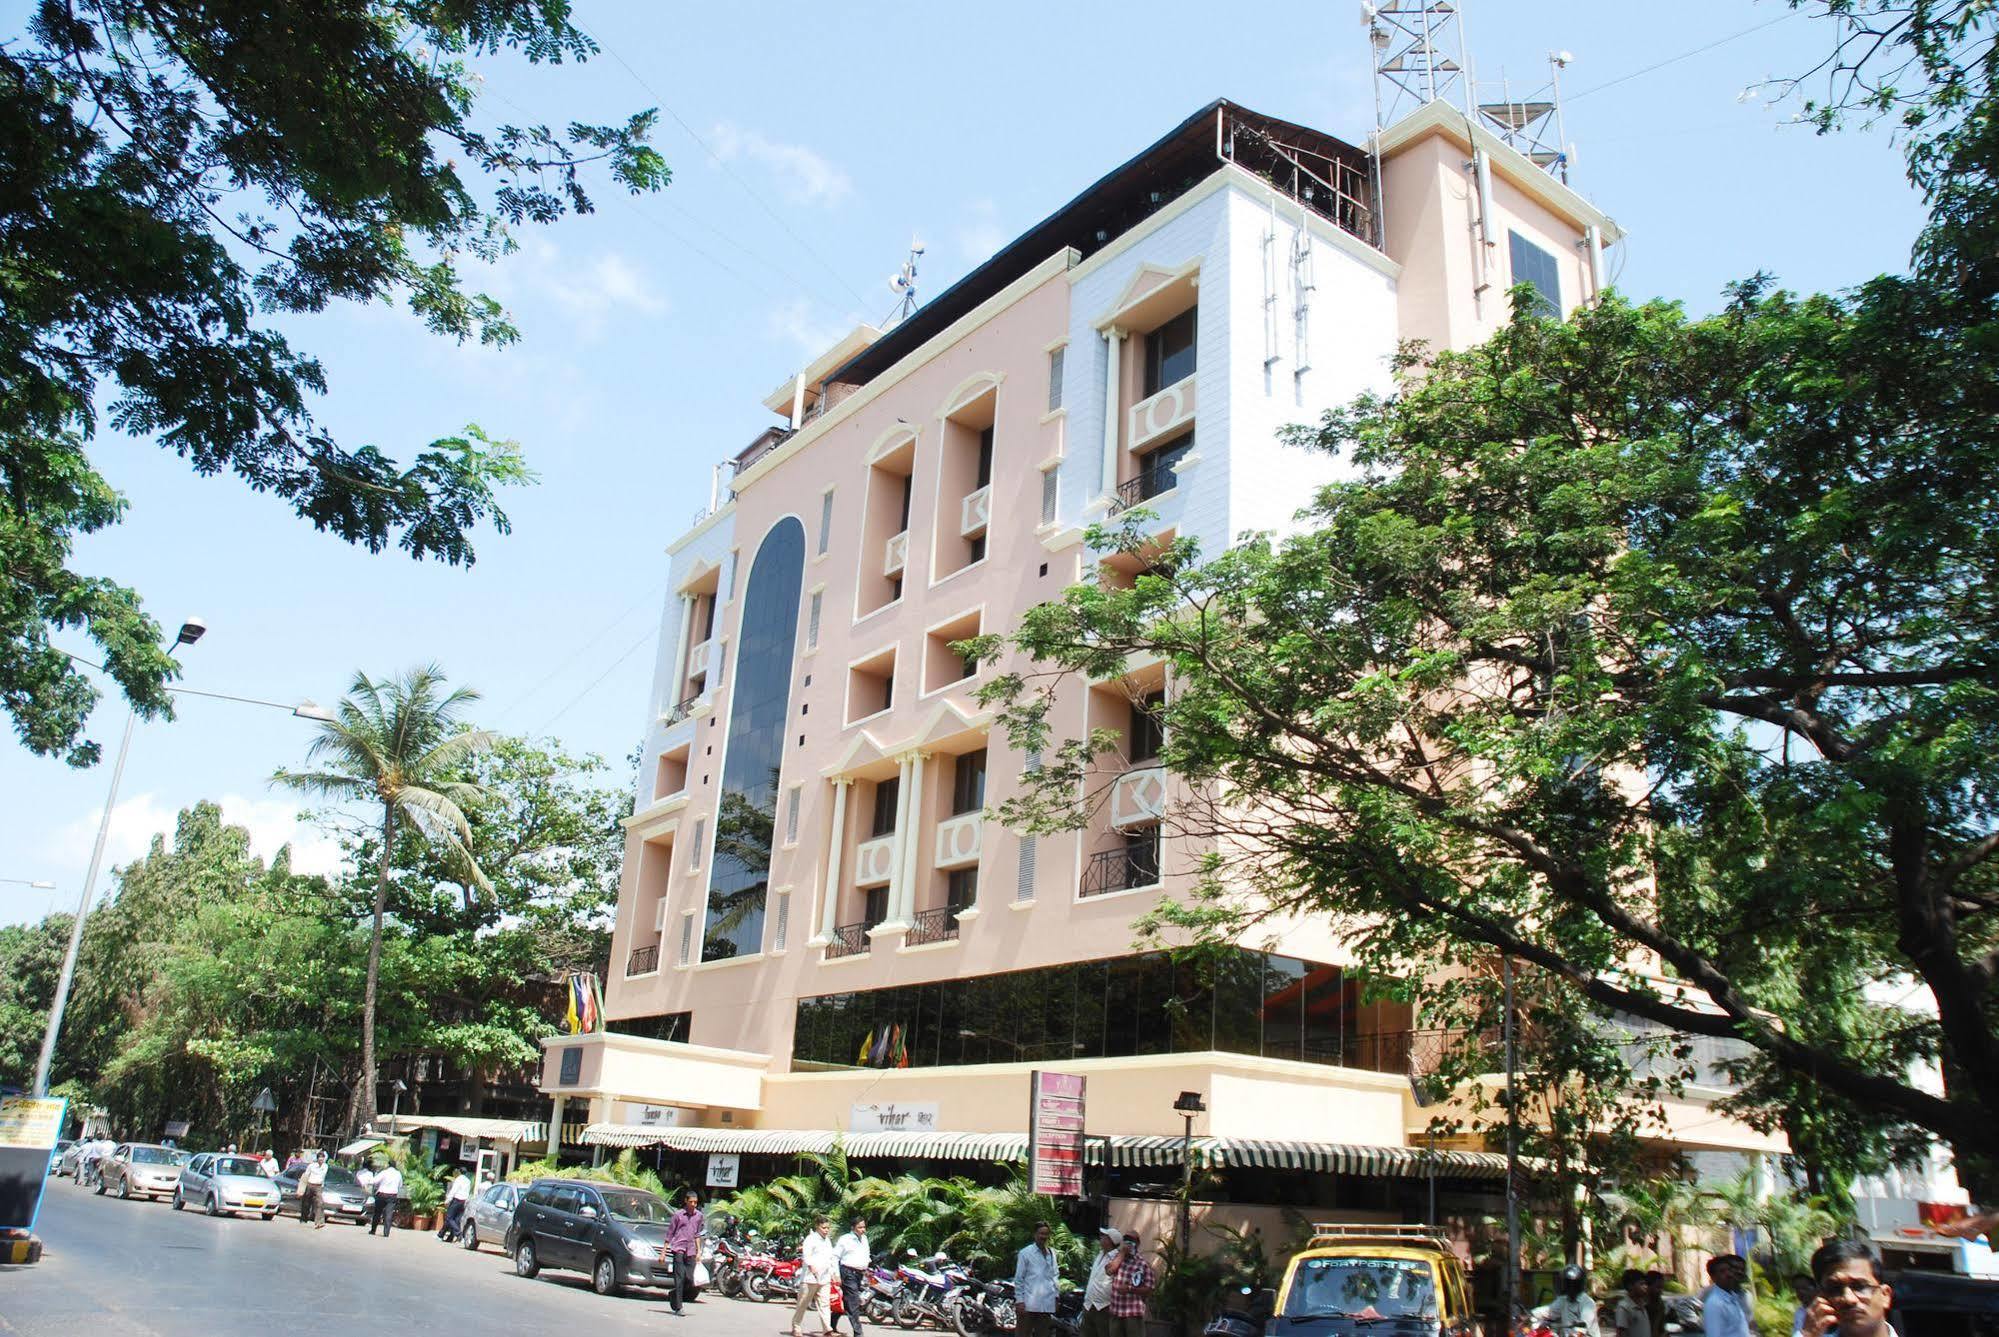 The International By Tunga Hotel Mumbai Exterior foto